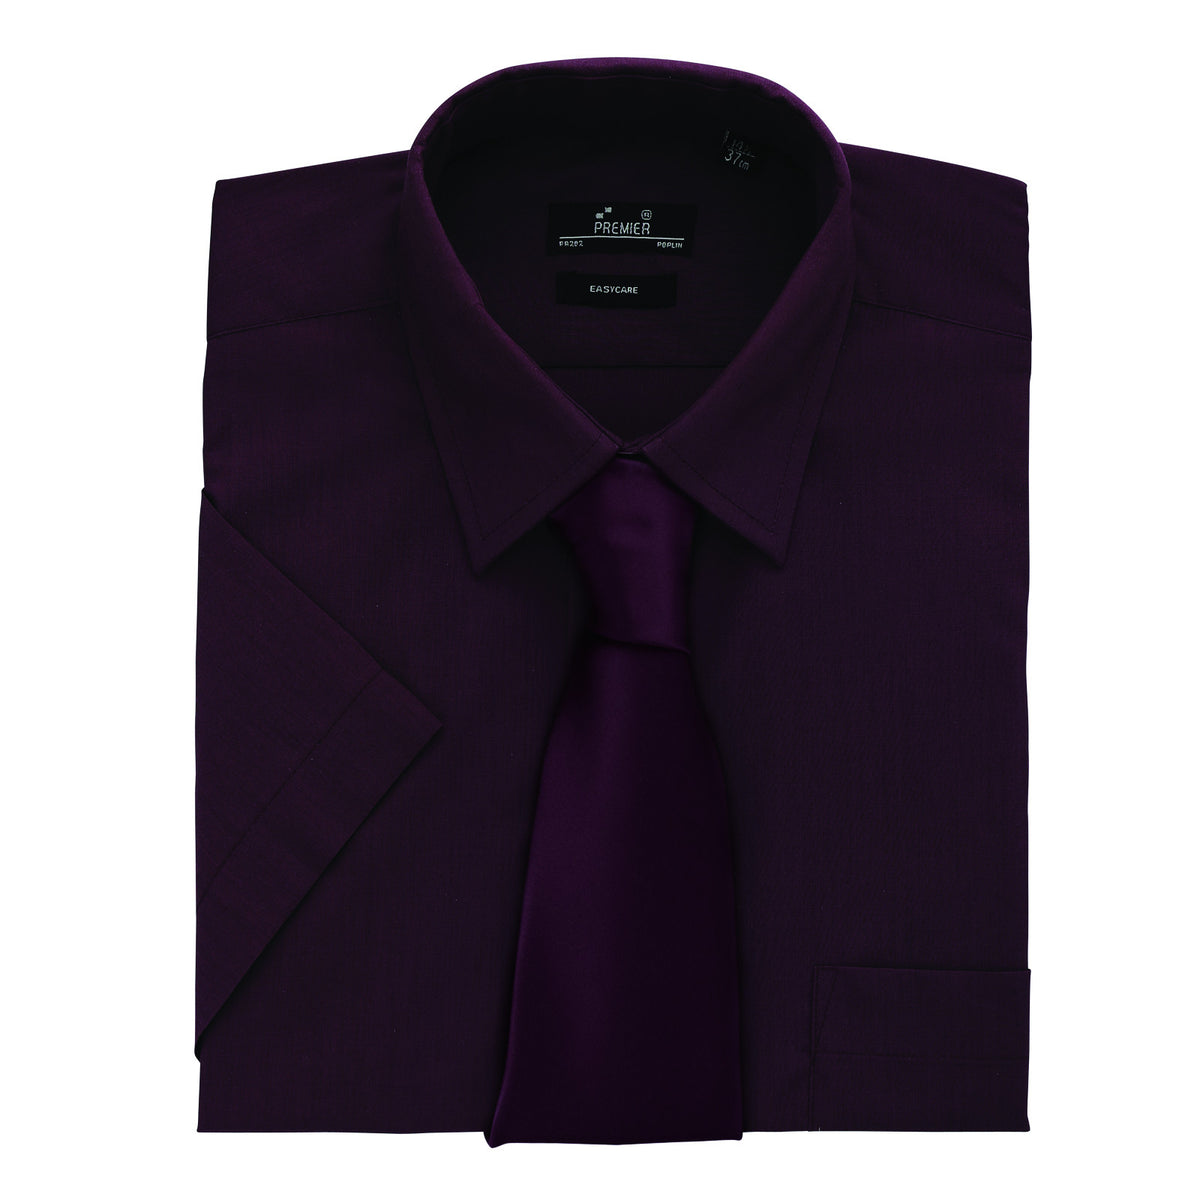 Premier Poplin Shirts (Navy, Lilac, Purple, Violet, Aubergine) - peterdrew.com
 - 11